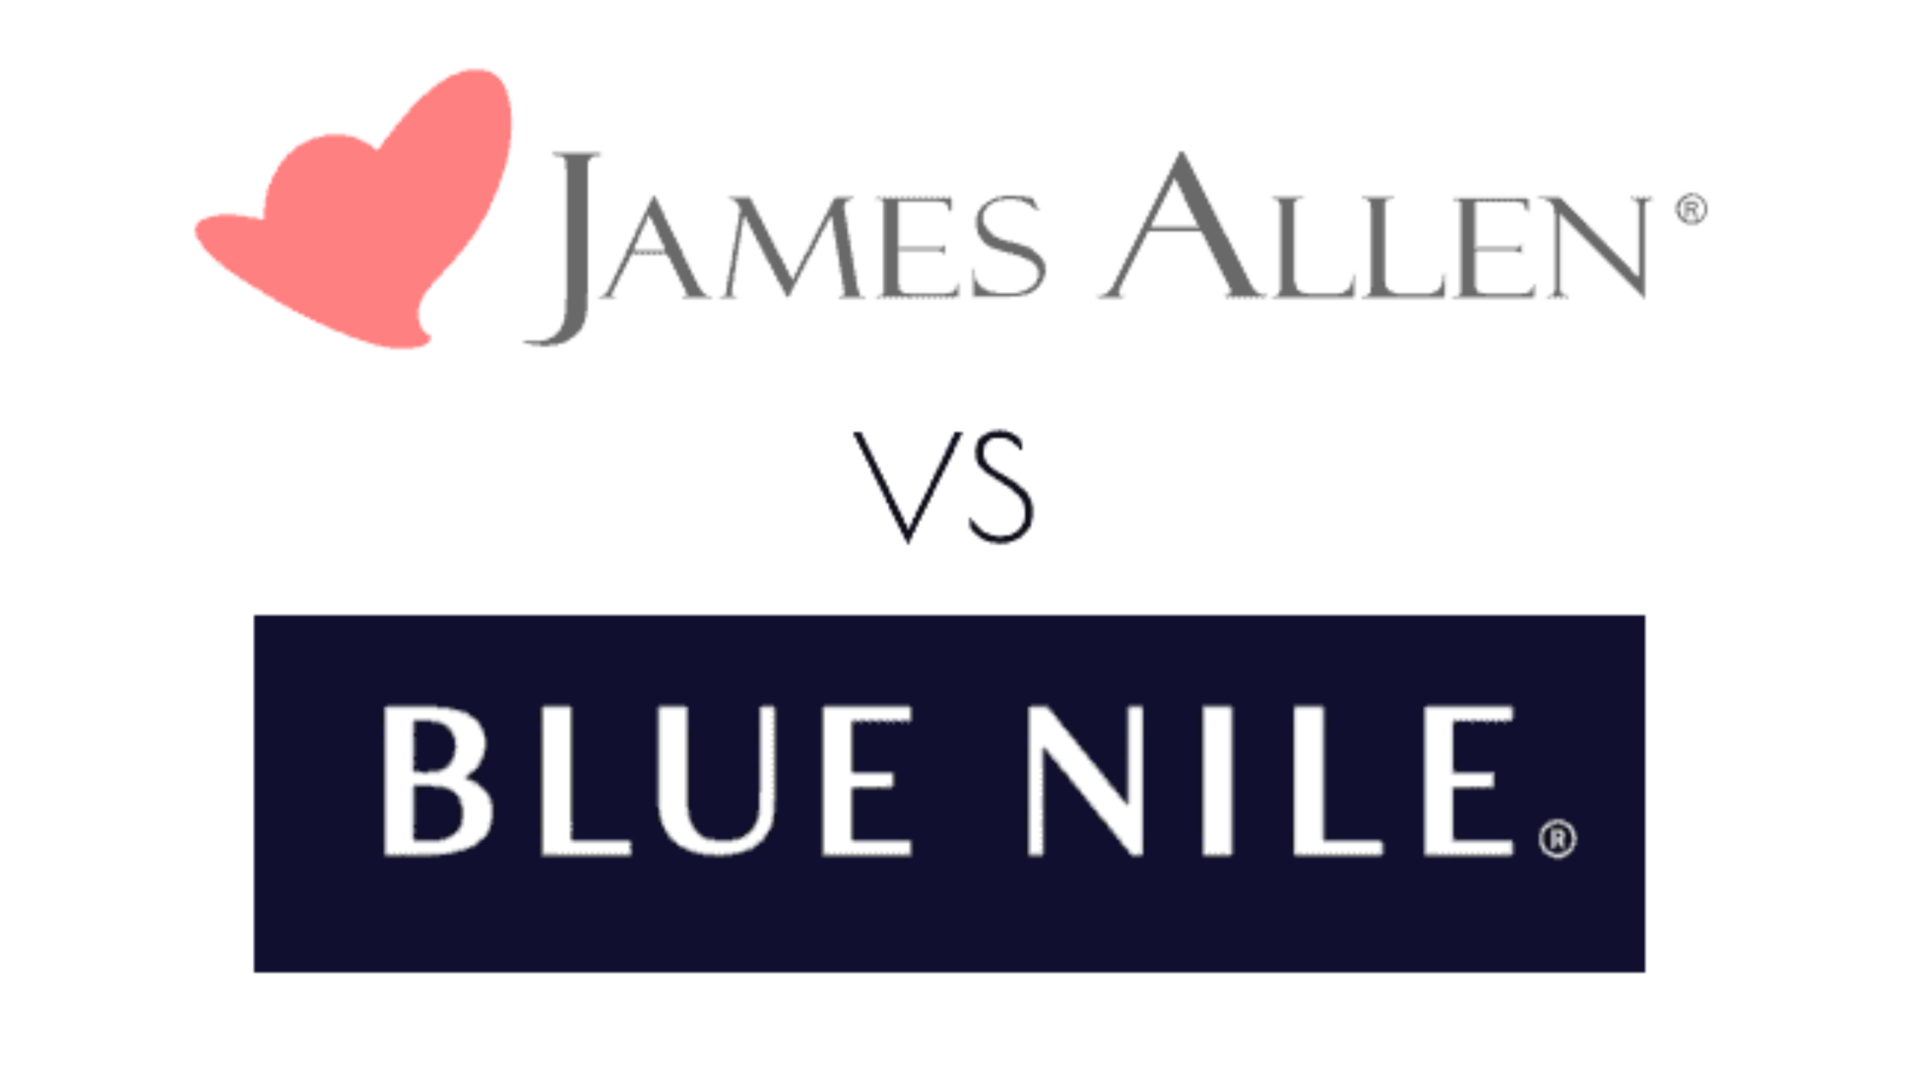 James Allen vs Blue Nile cover image